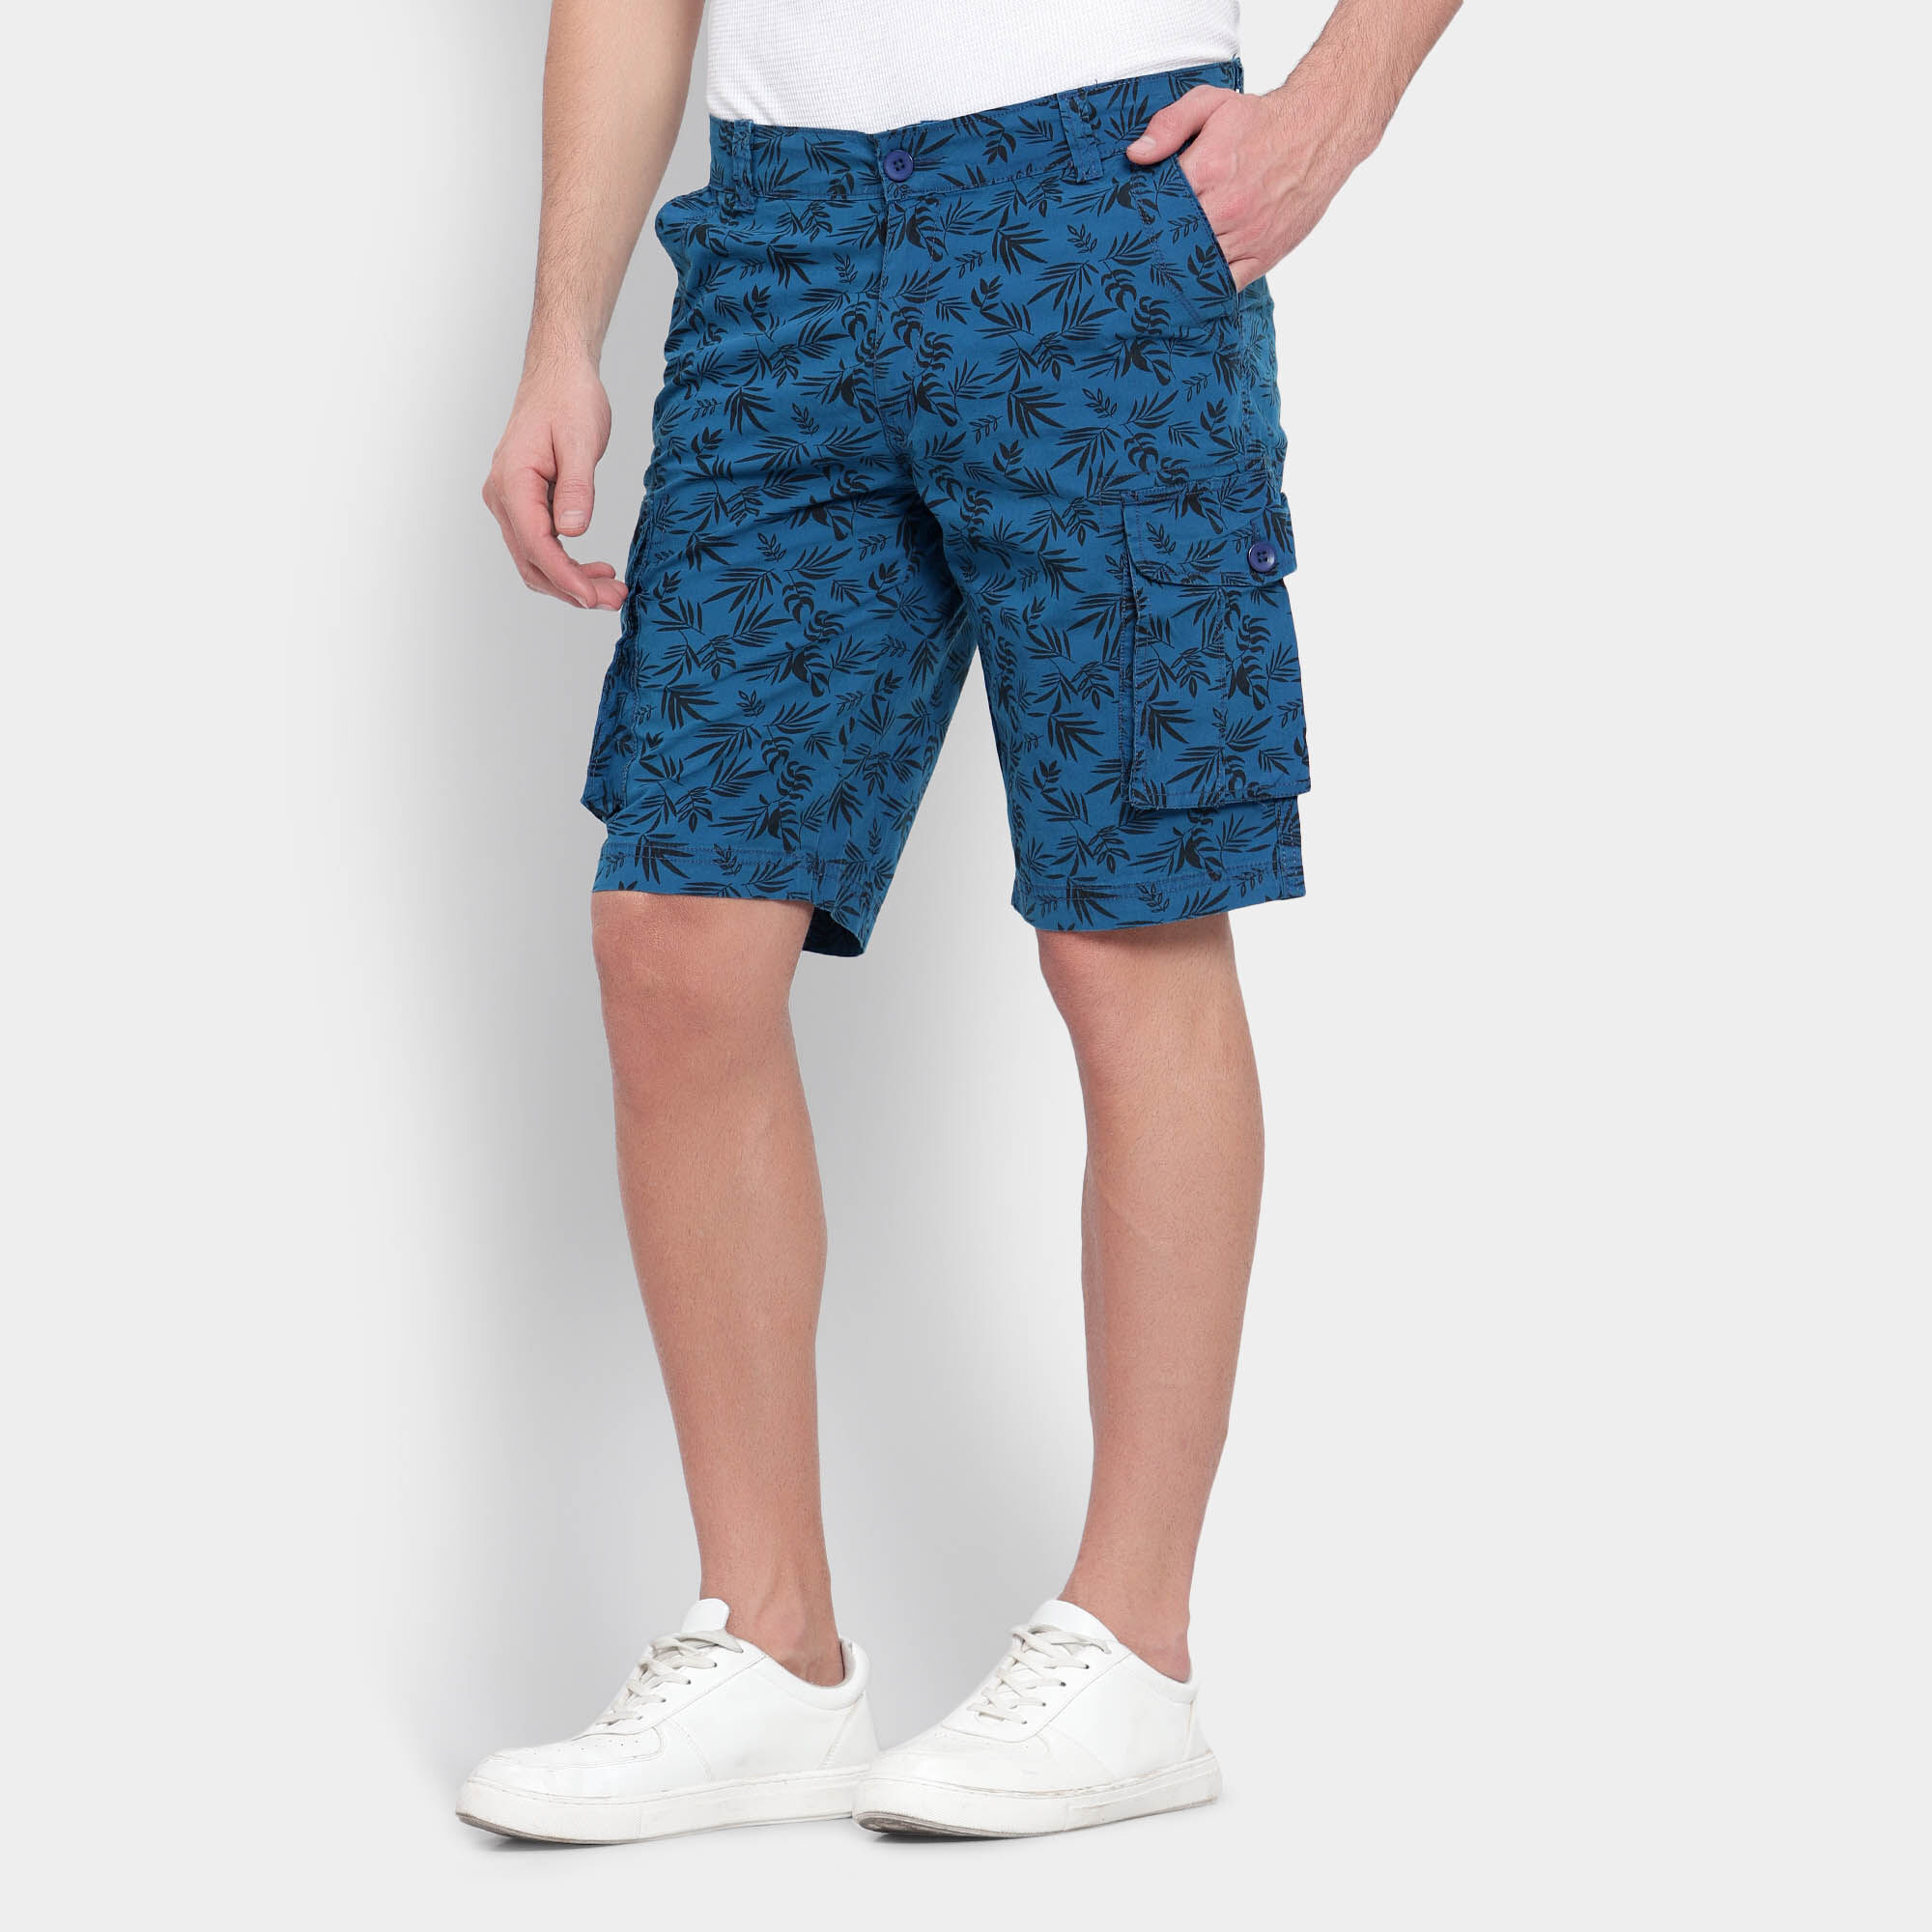 Bermuda Shorts for Women Summer Cotton Linen Plus Size Elastic Waist Knee  Length Floral Drawstring Pants with Pockets - Walmart.com